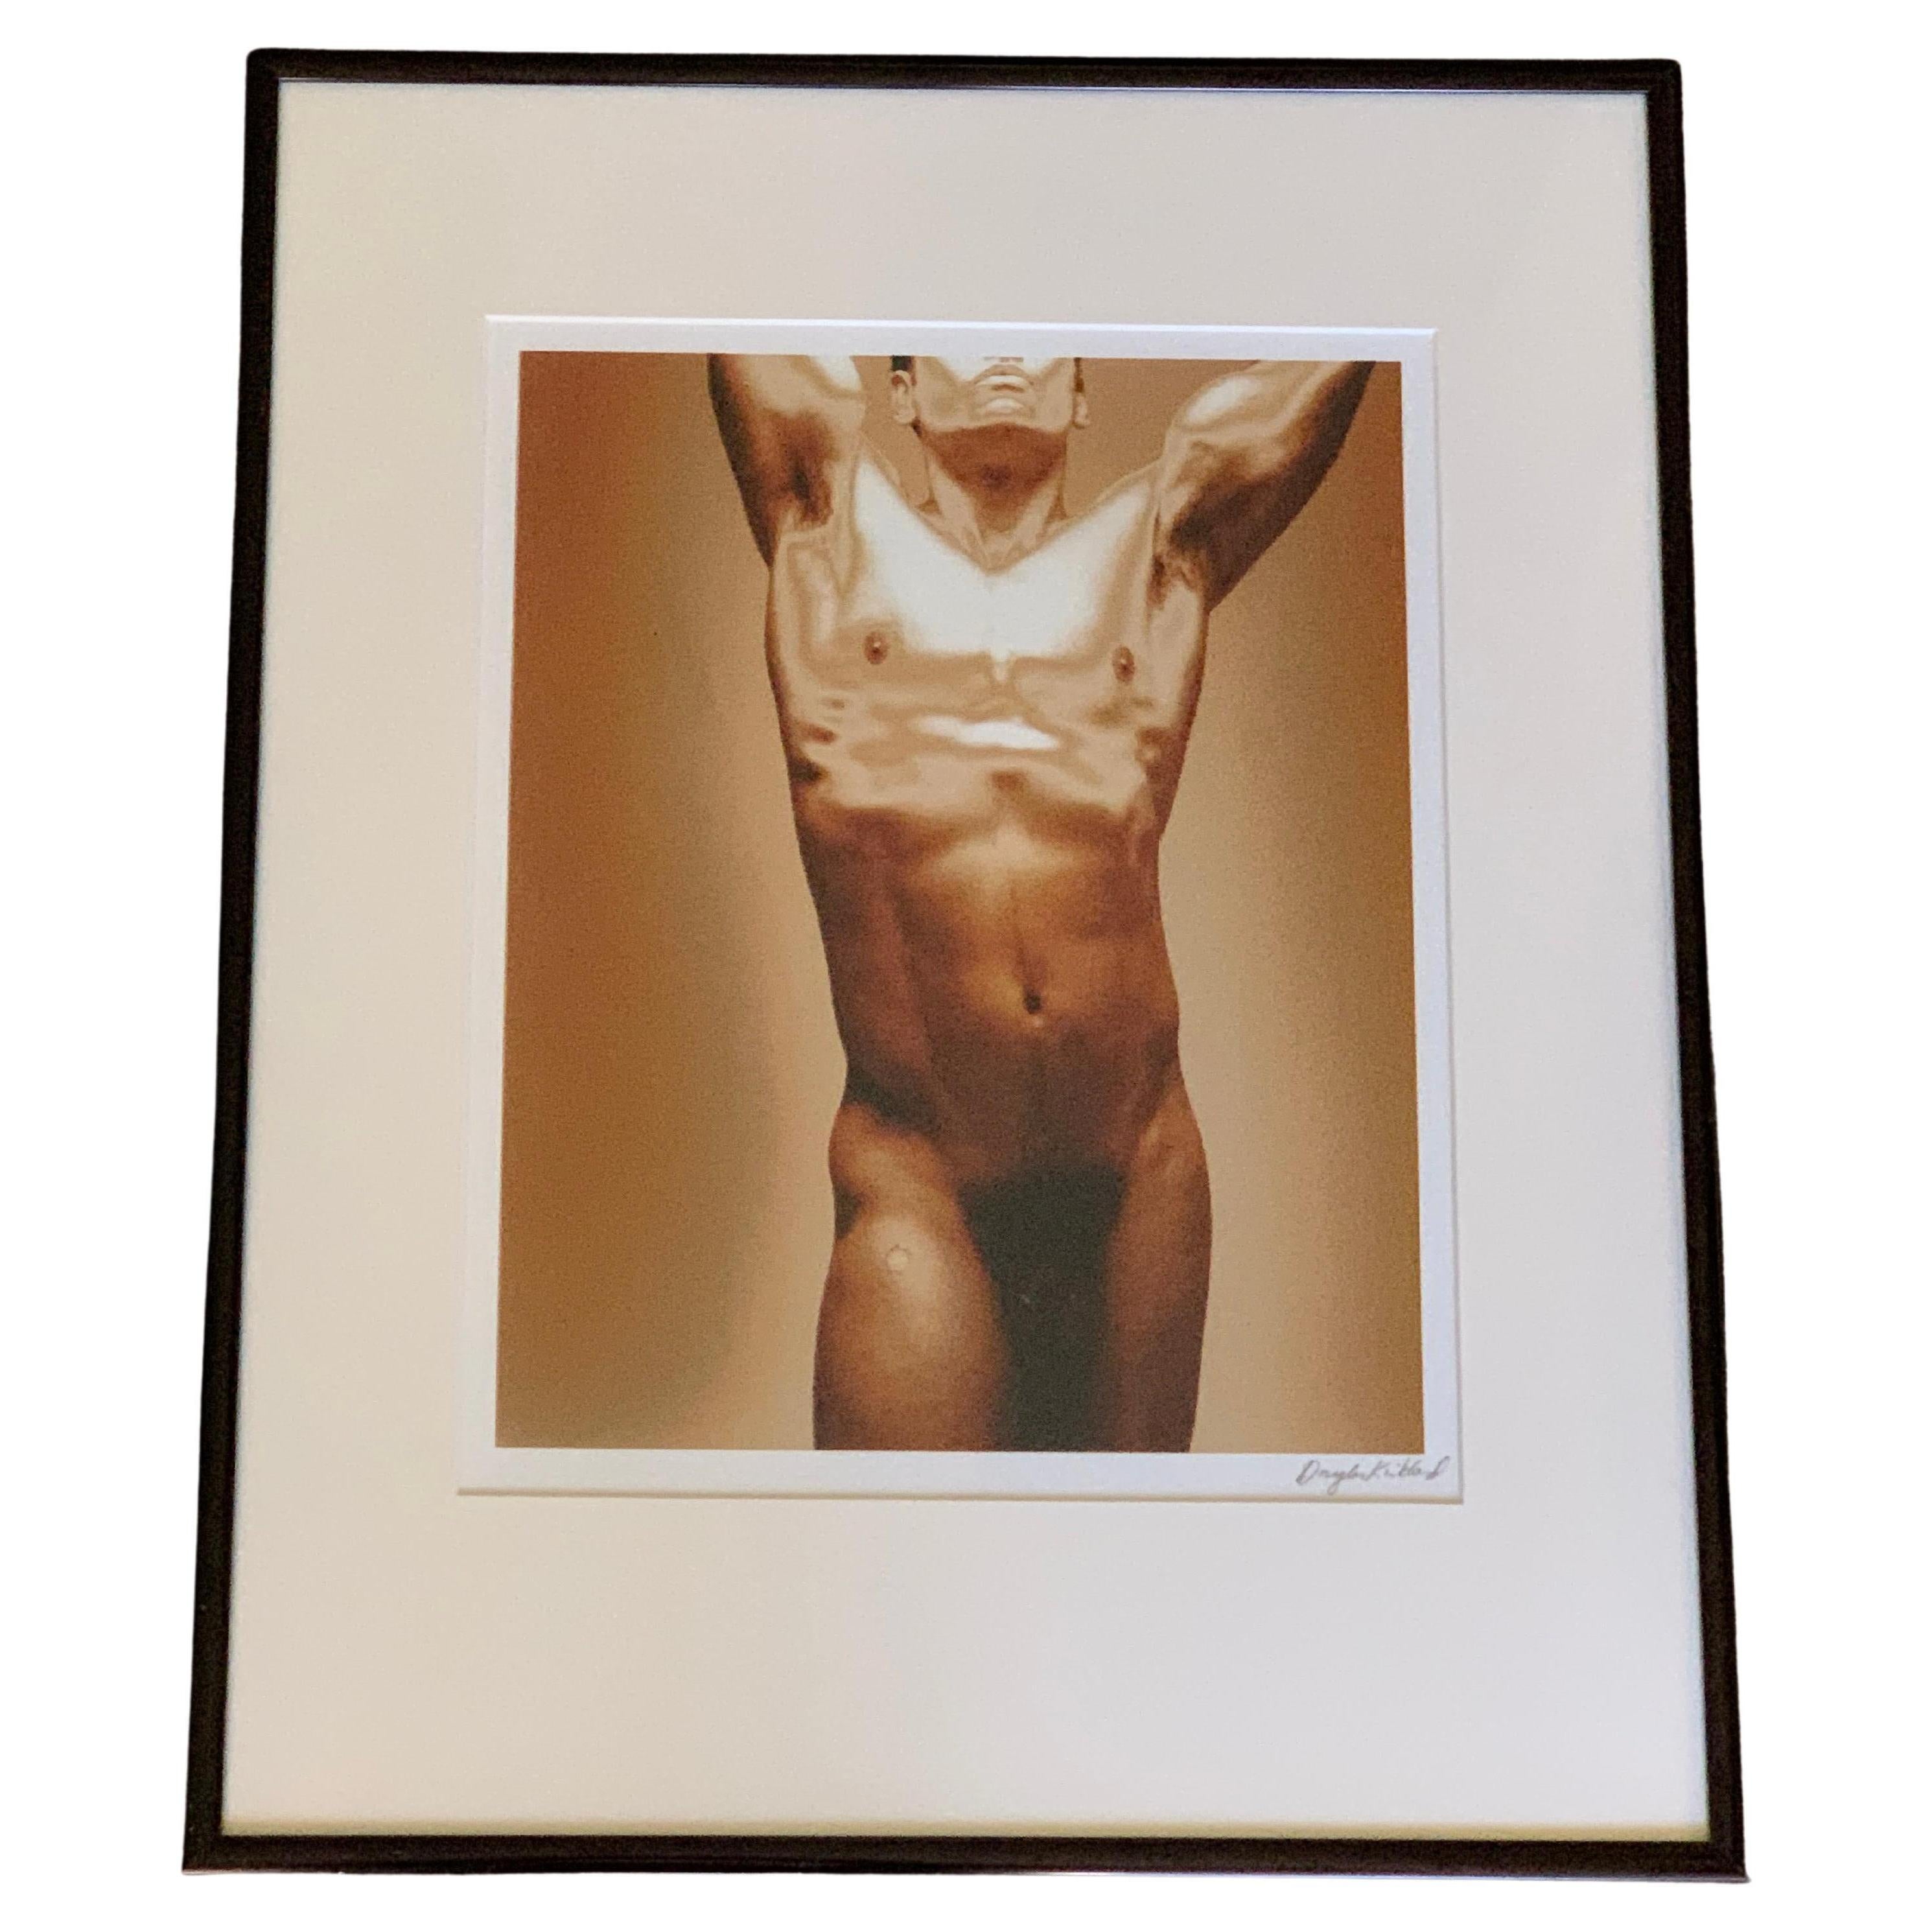 Photographie d'origine rare d'un nu masculin « Golden Boy » de Douglas Kirkland